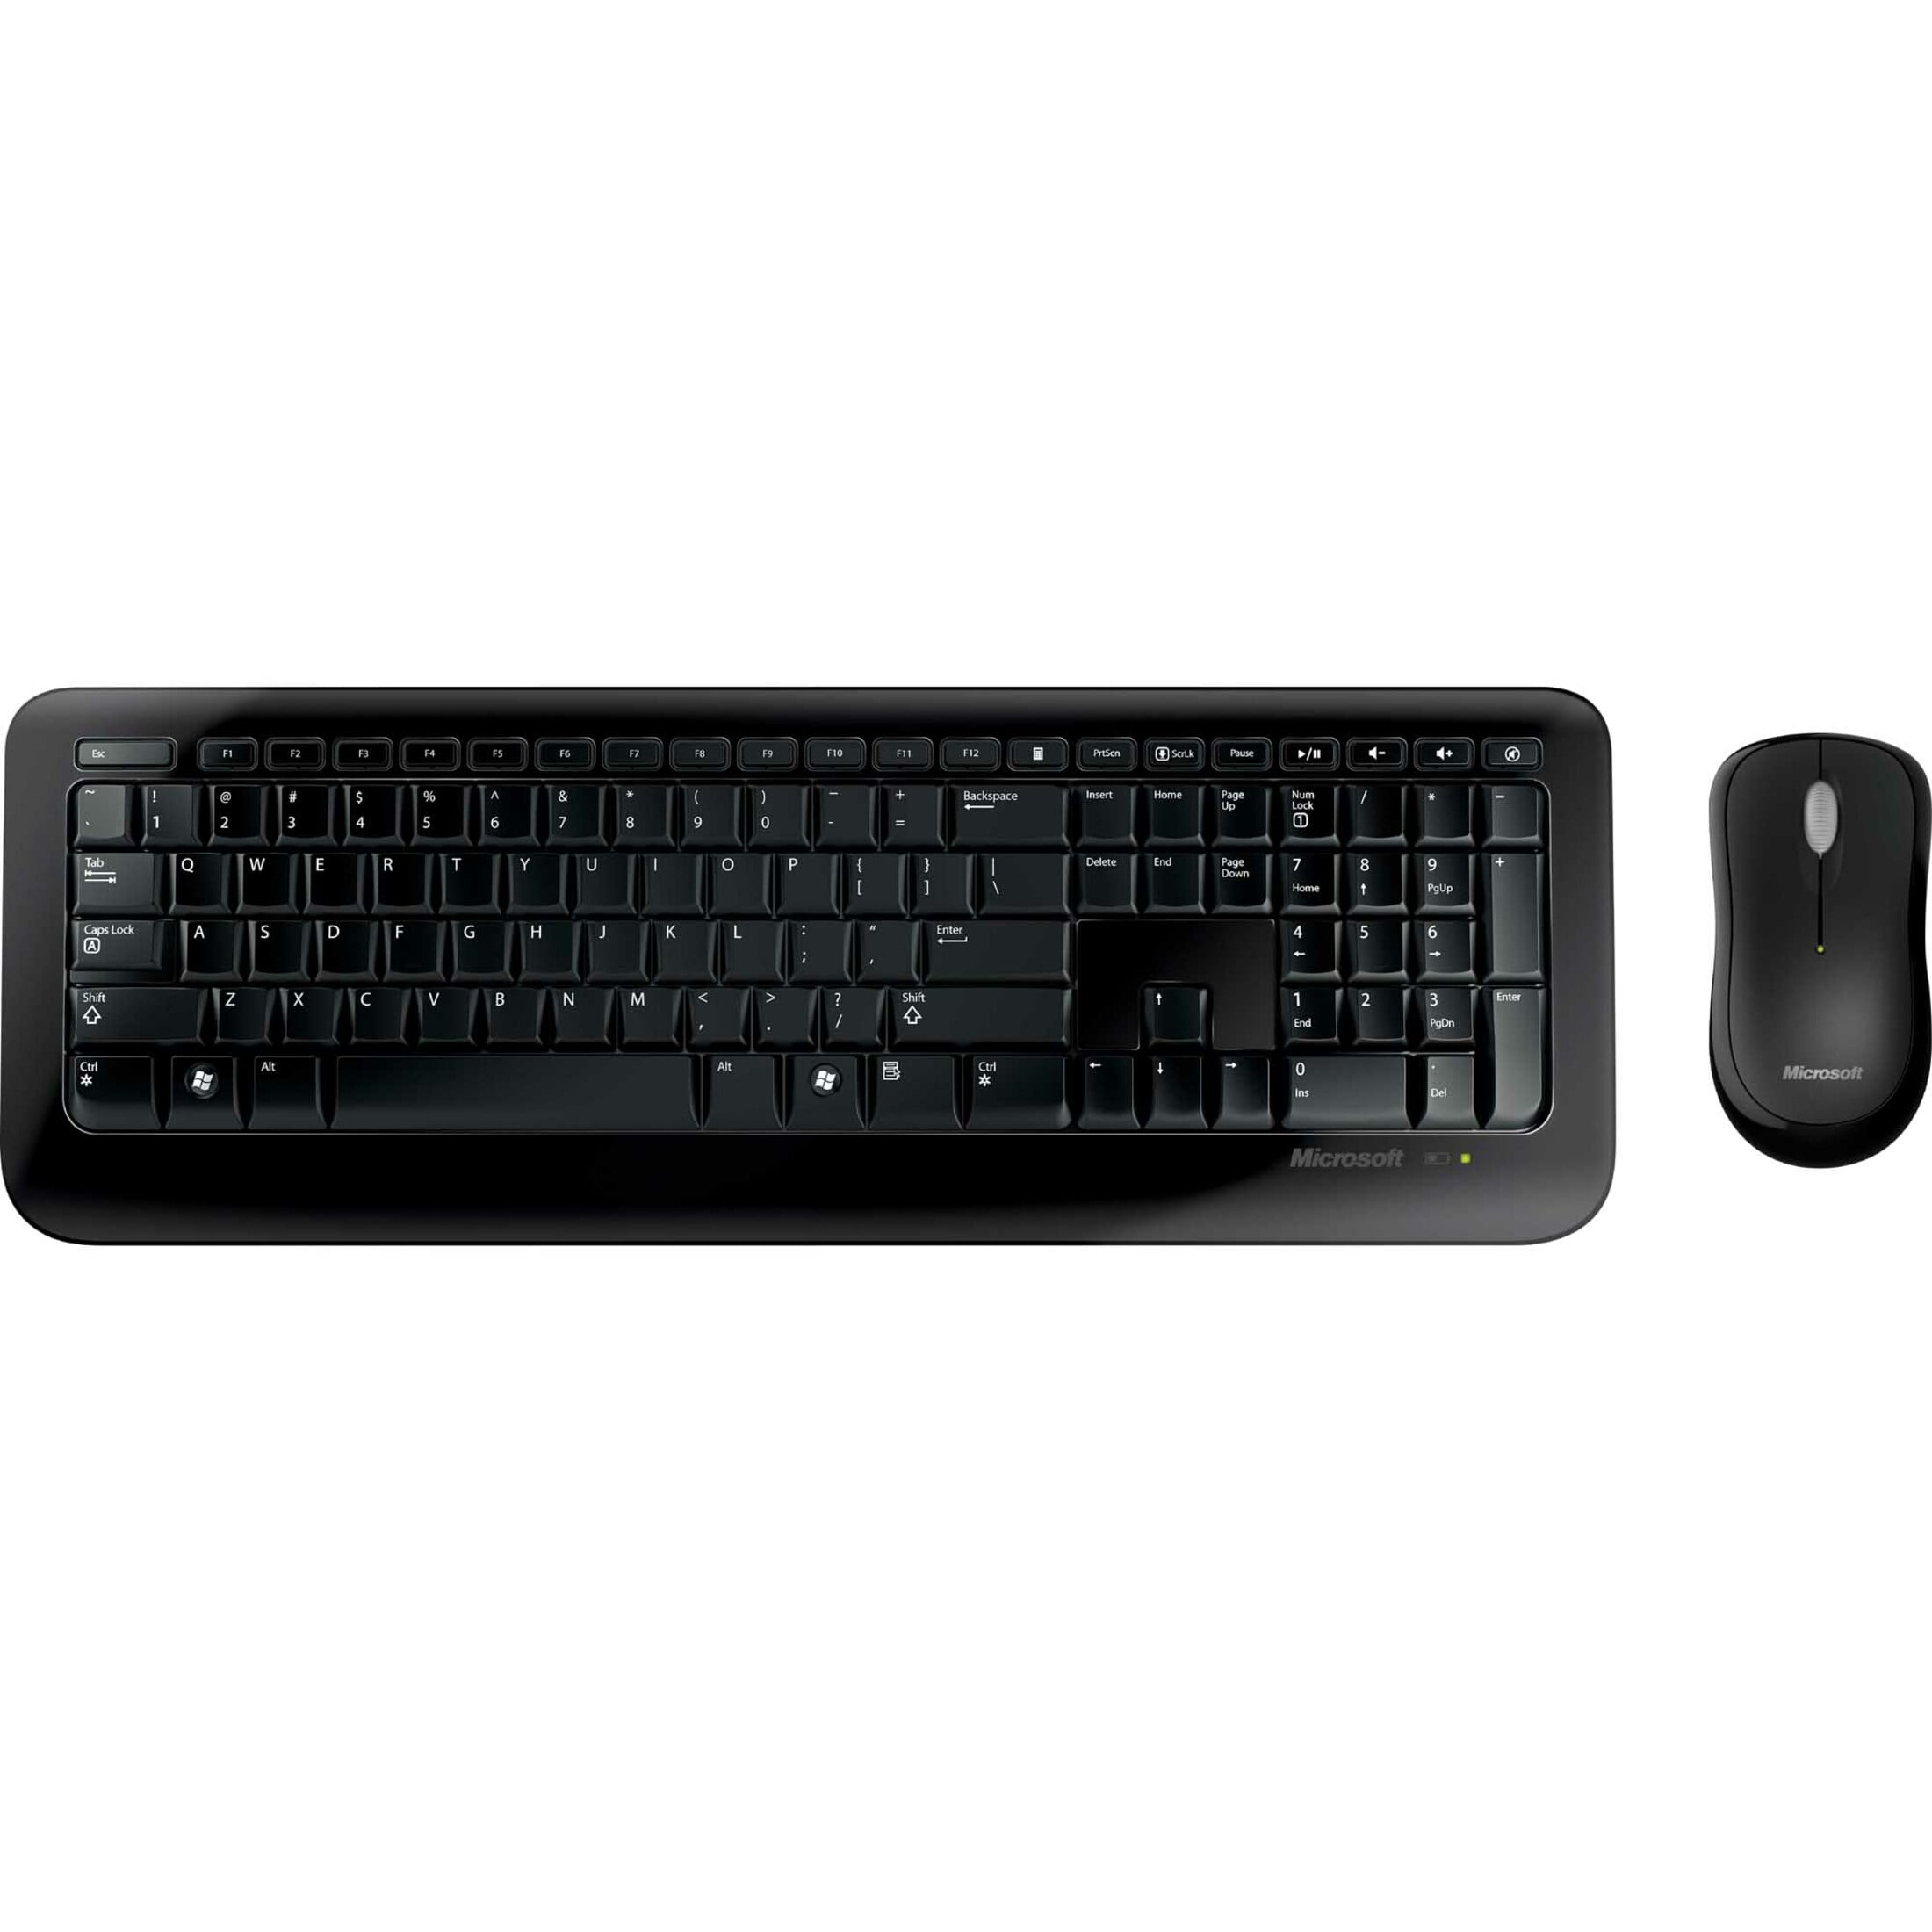 microsoft wireless keyboard and mouse 3000